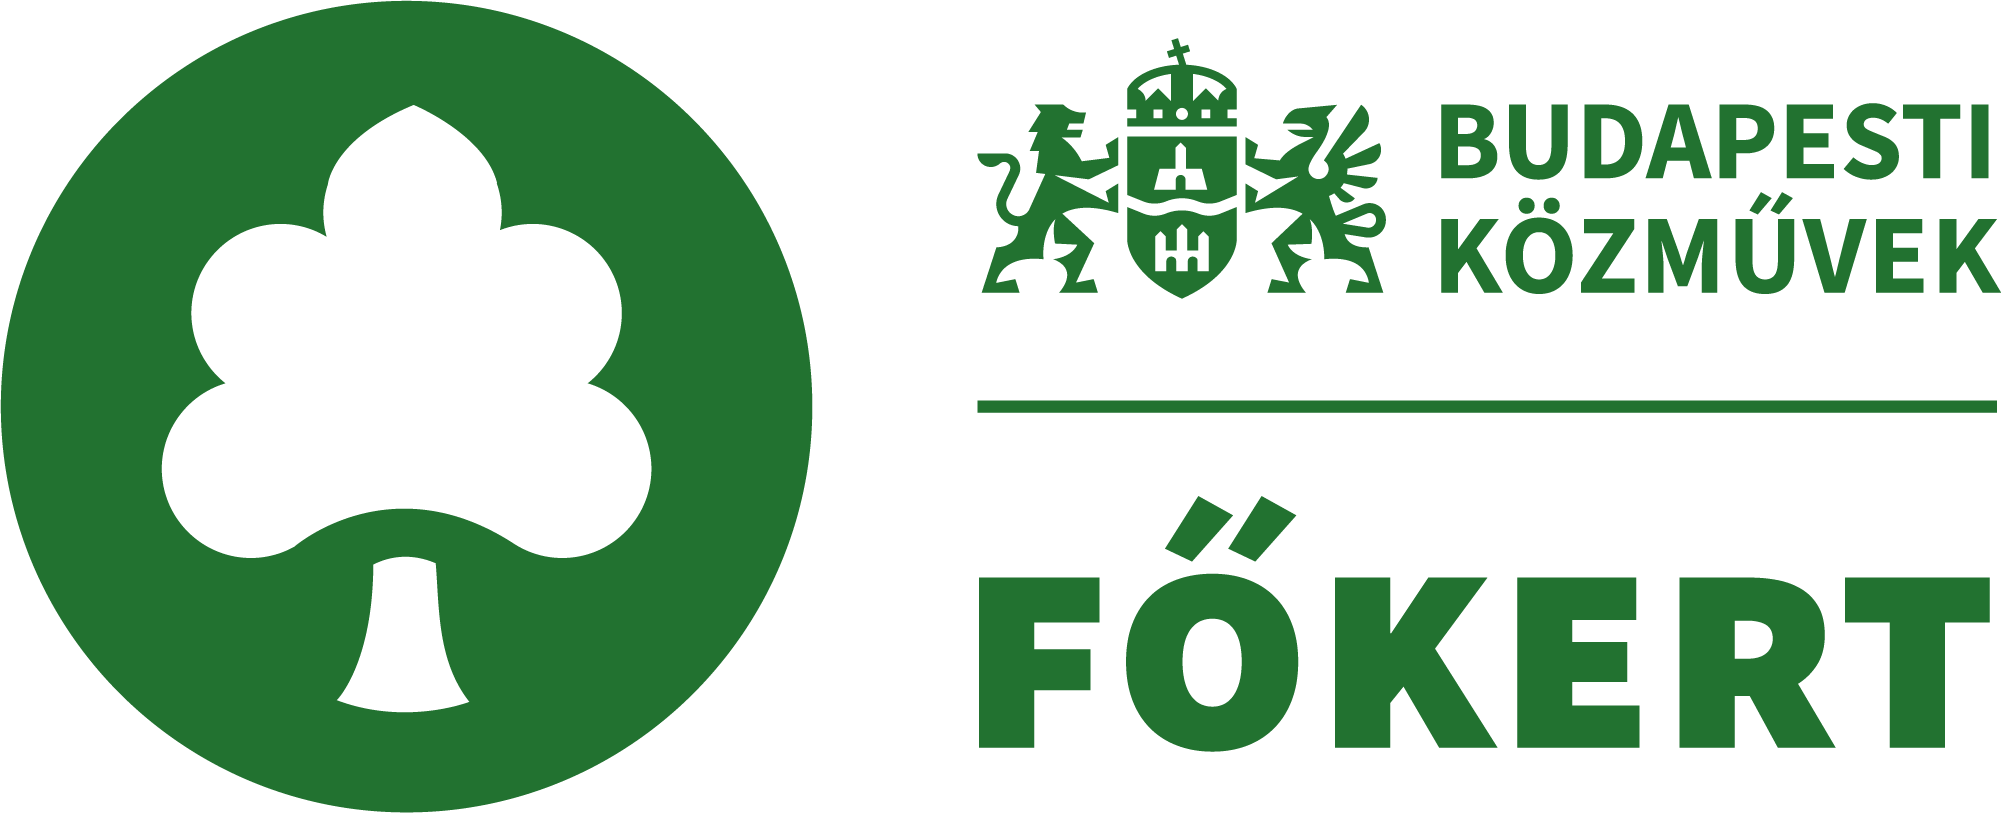 Főkert logó